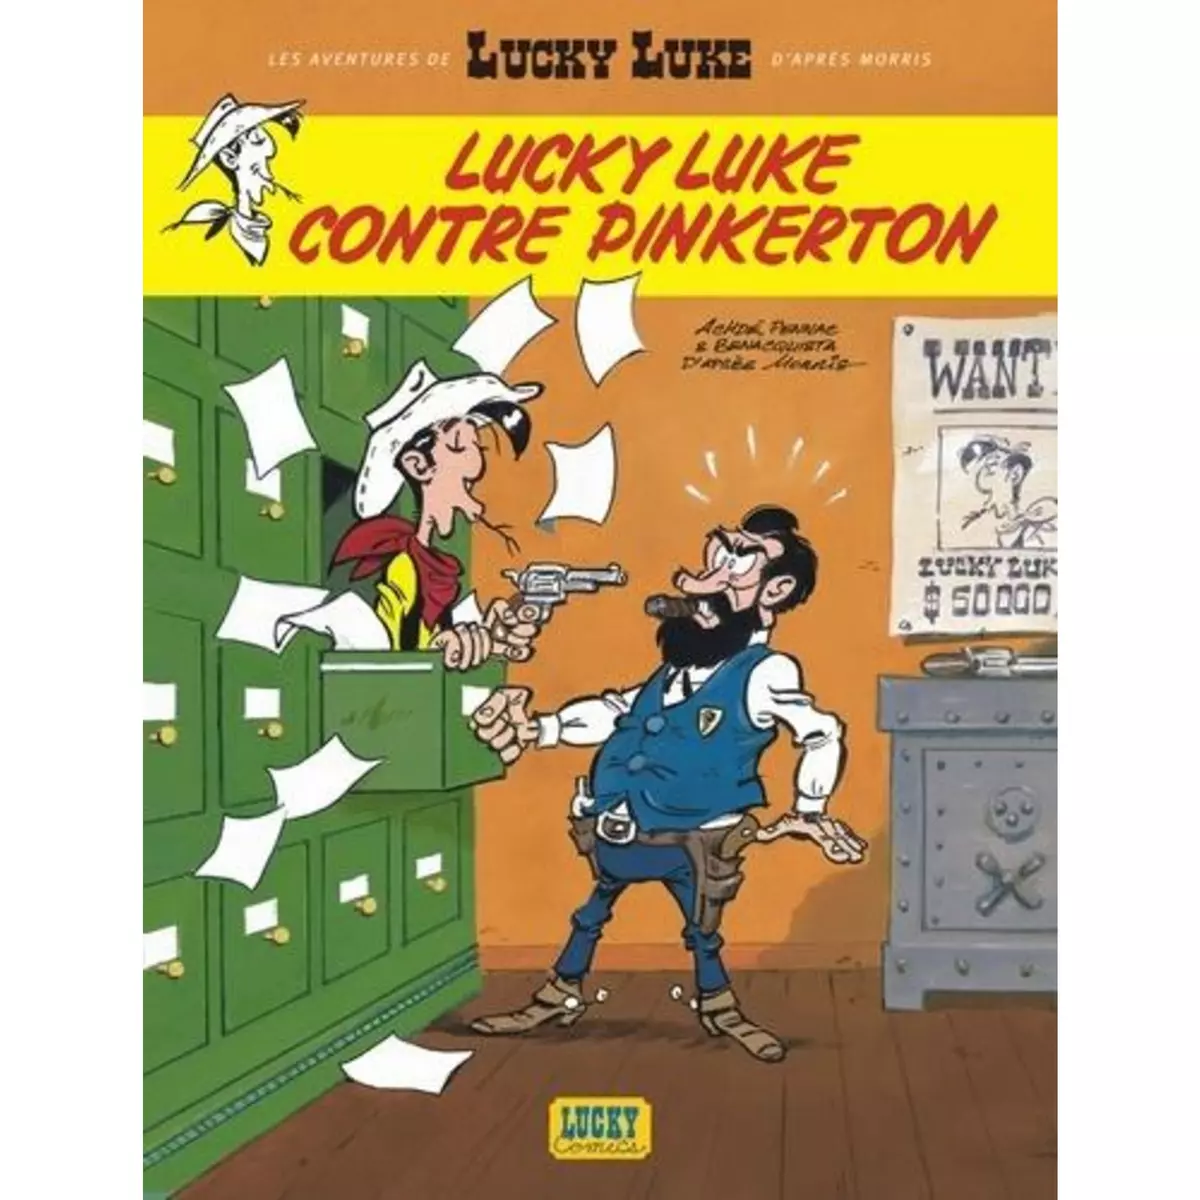  LES AVENTURES DE LUCKY LUKE D'APRES MORRIS TOME 4 : LUCKY LUKE CONTRE PINKERTON, Pennac Daniel